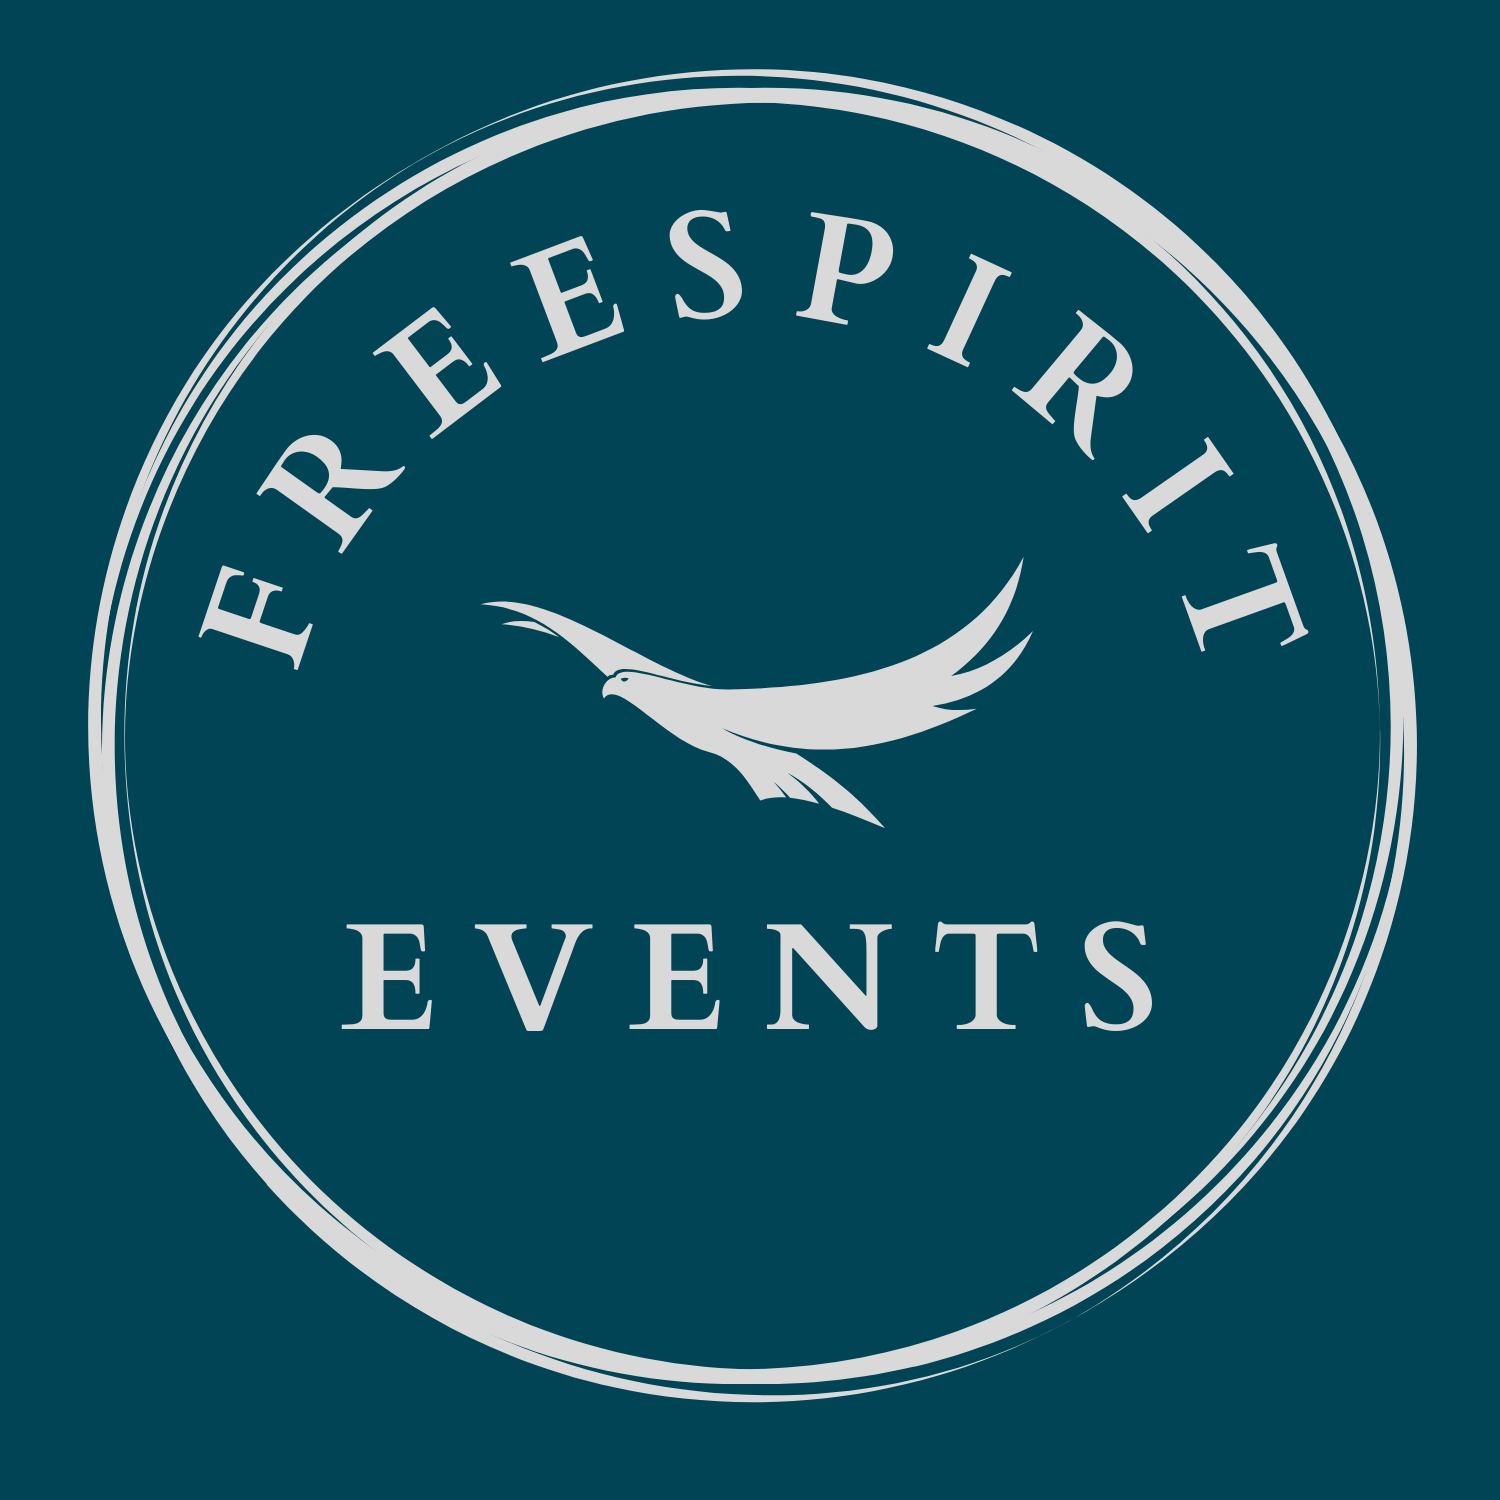 Free Spirit Events